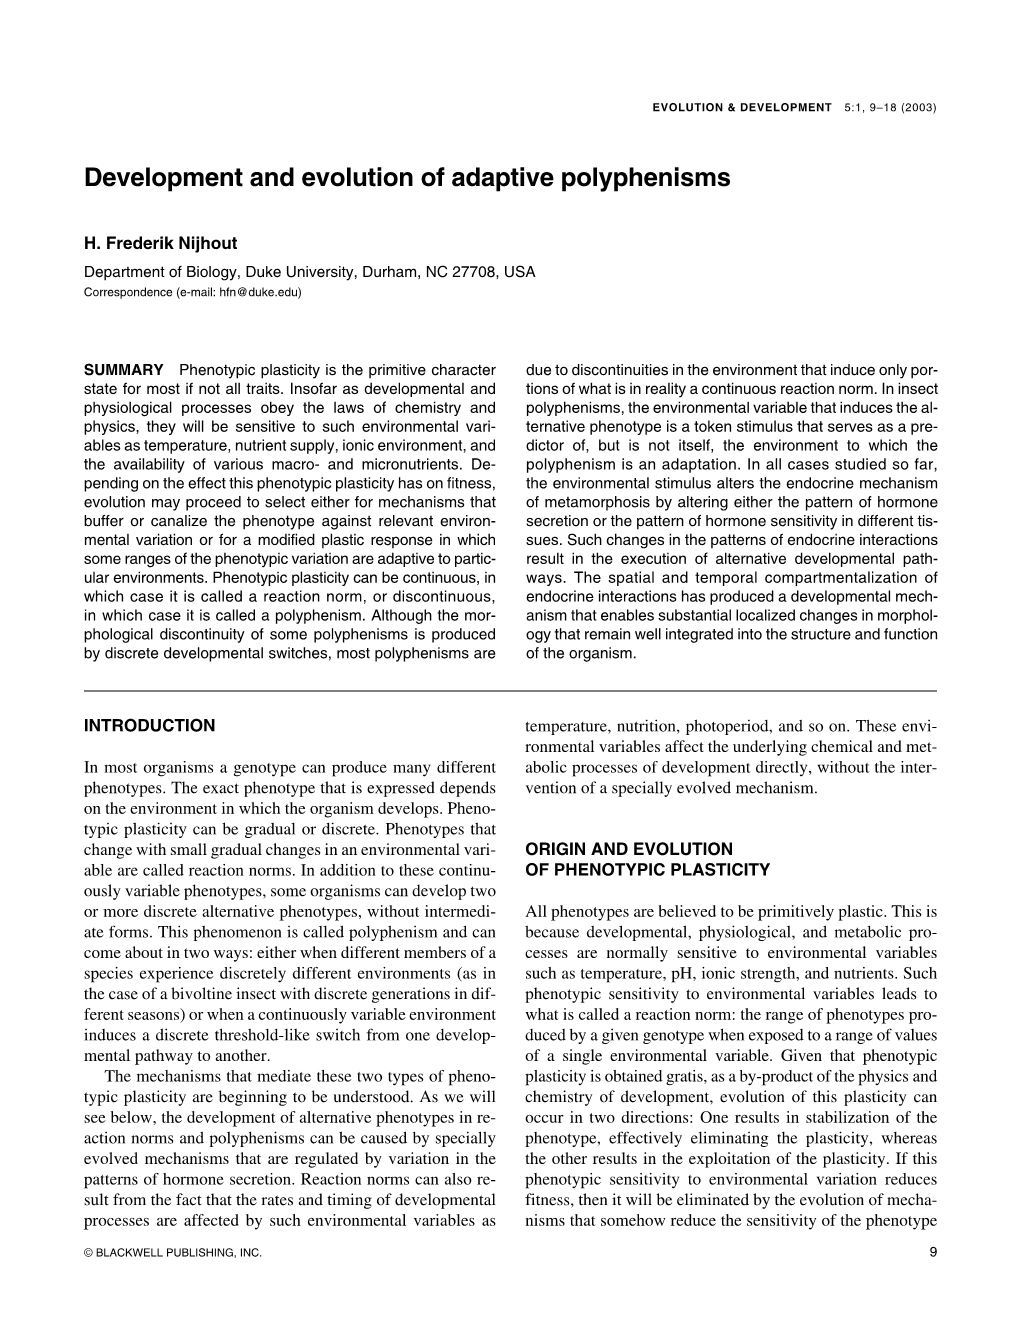 Development and Evolution of Adaptive Polyphenisms